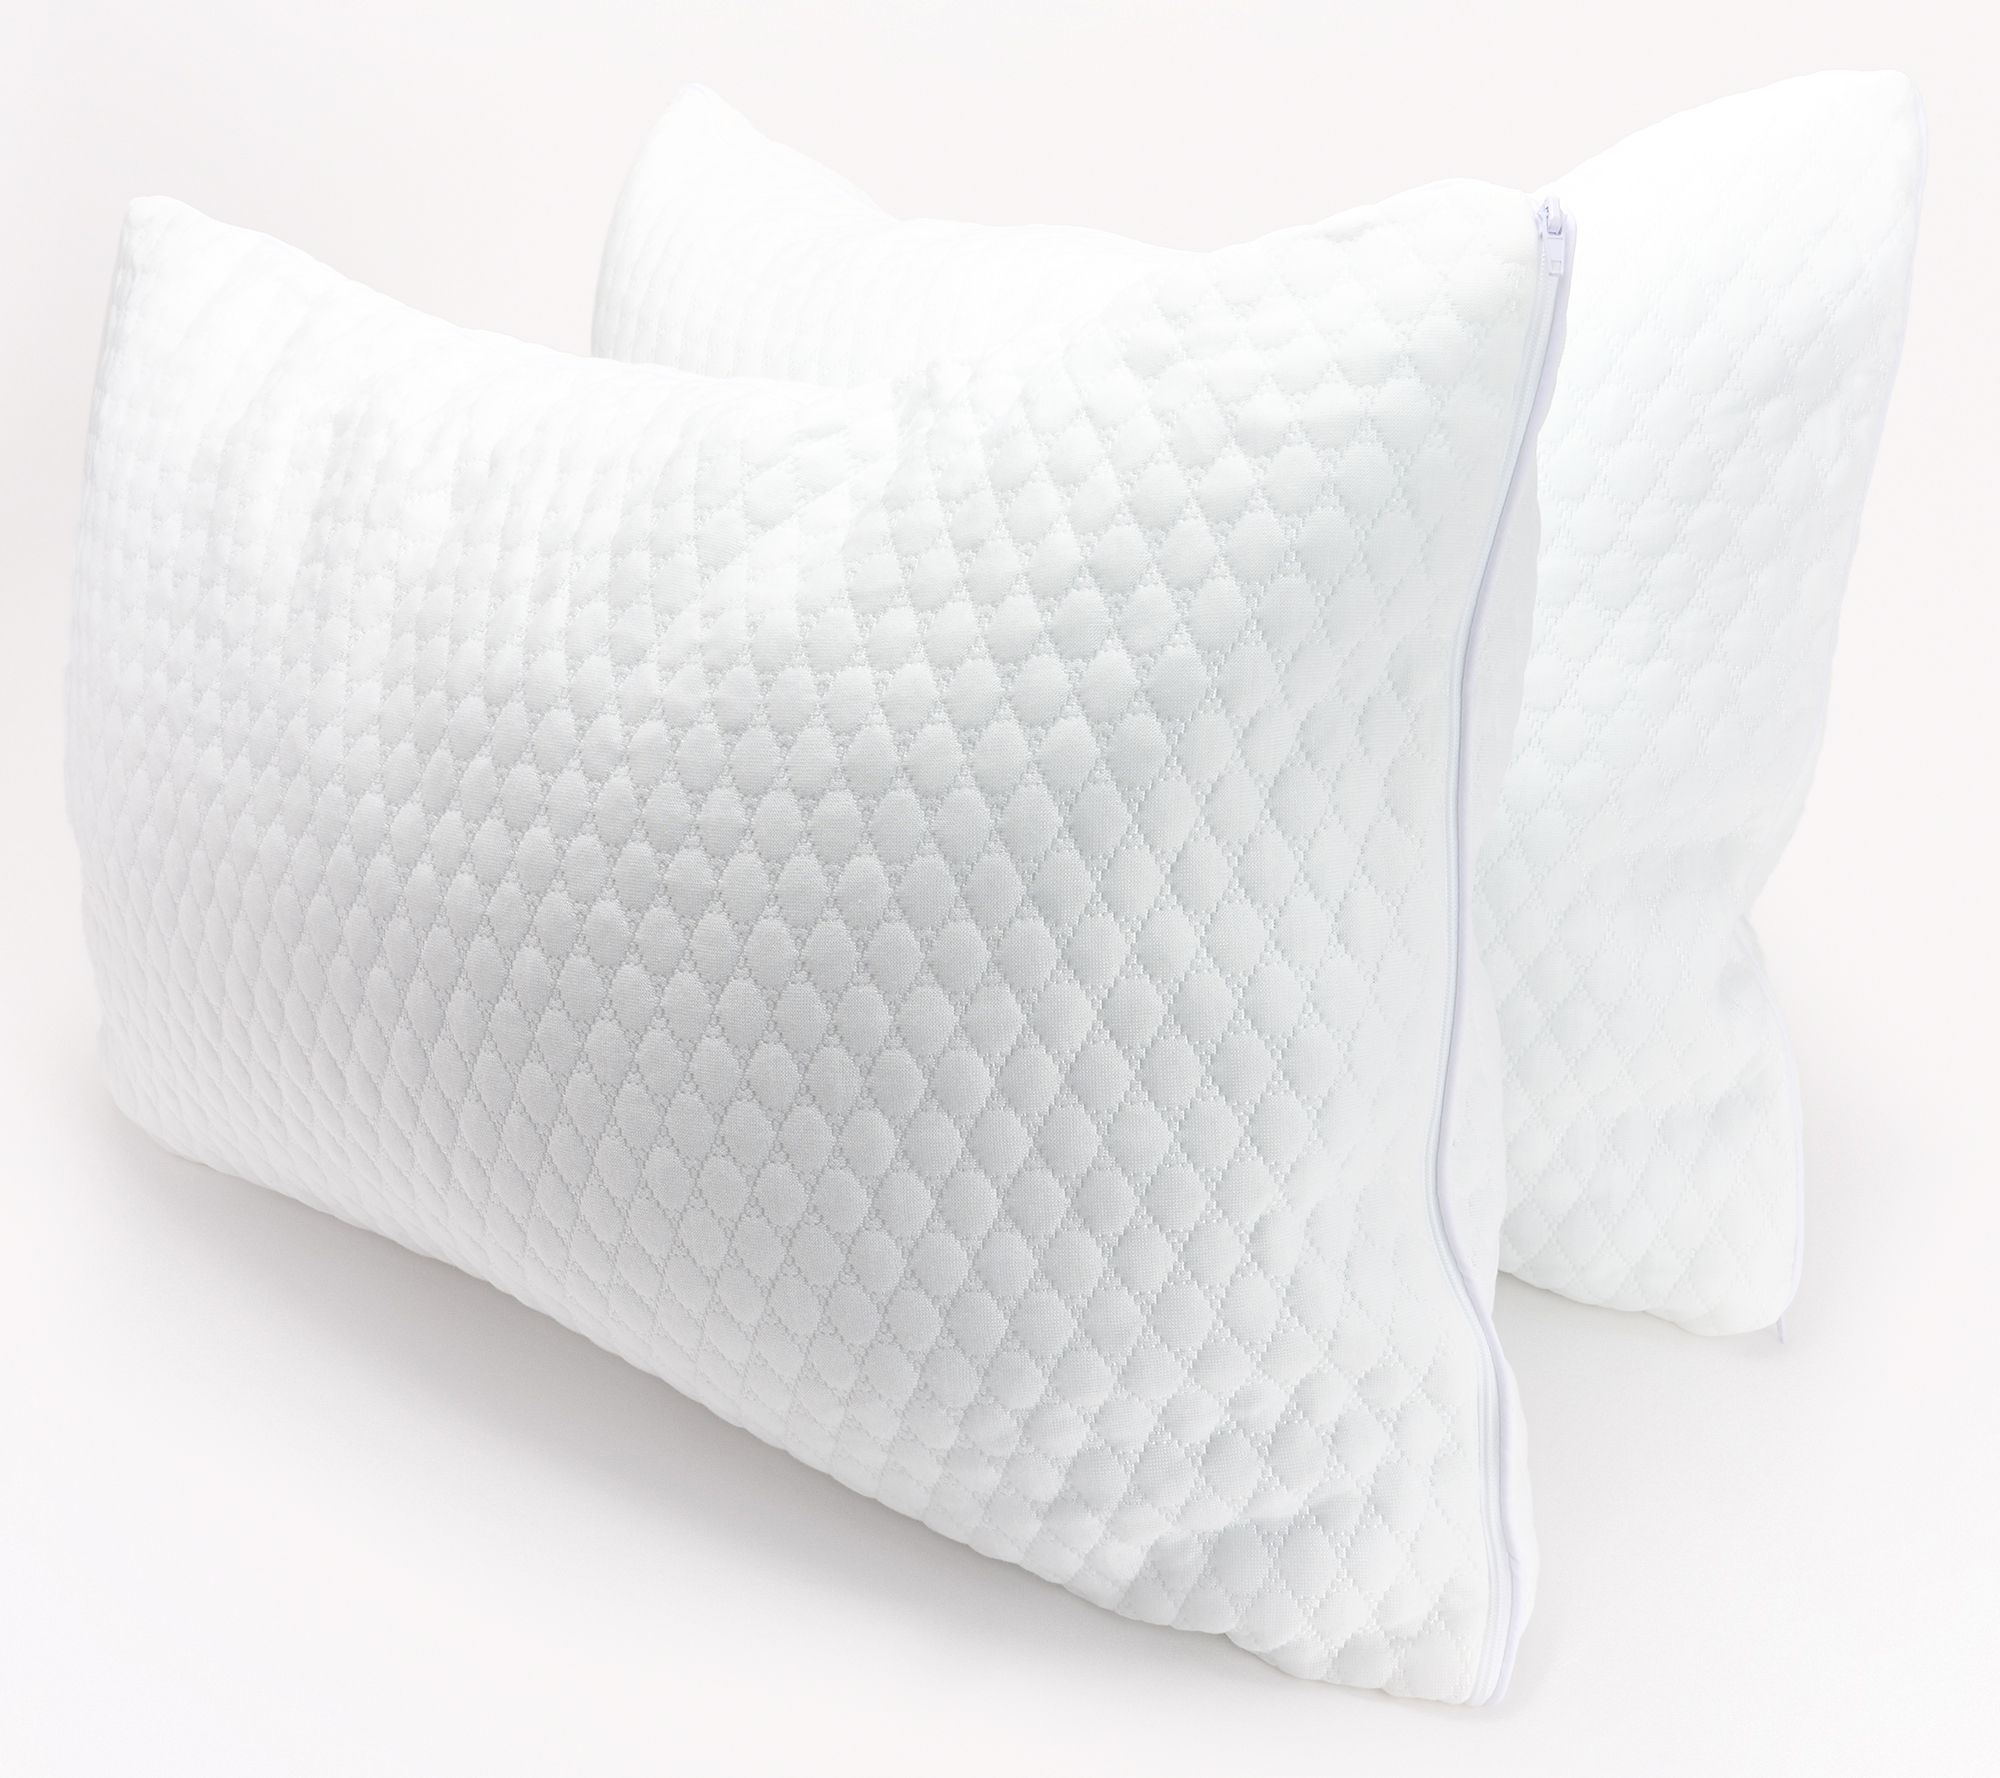 The Cushion Lab Deep Sleep Pillow Review 